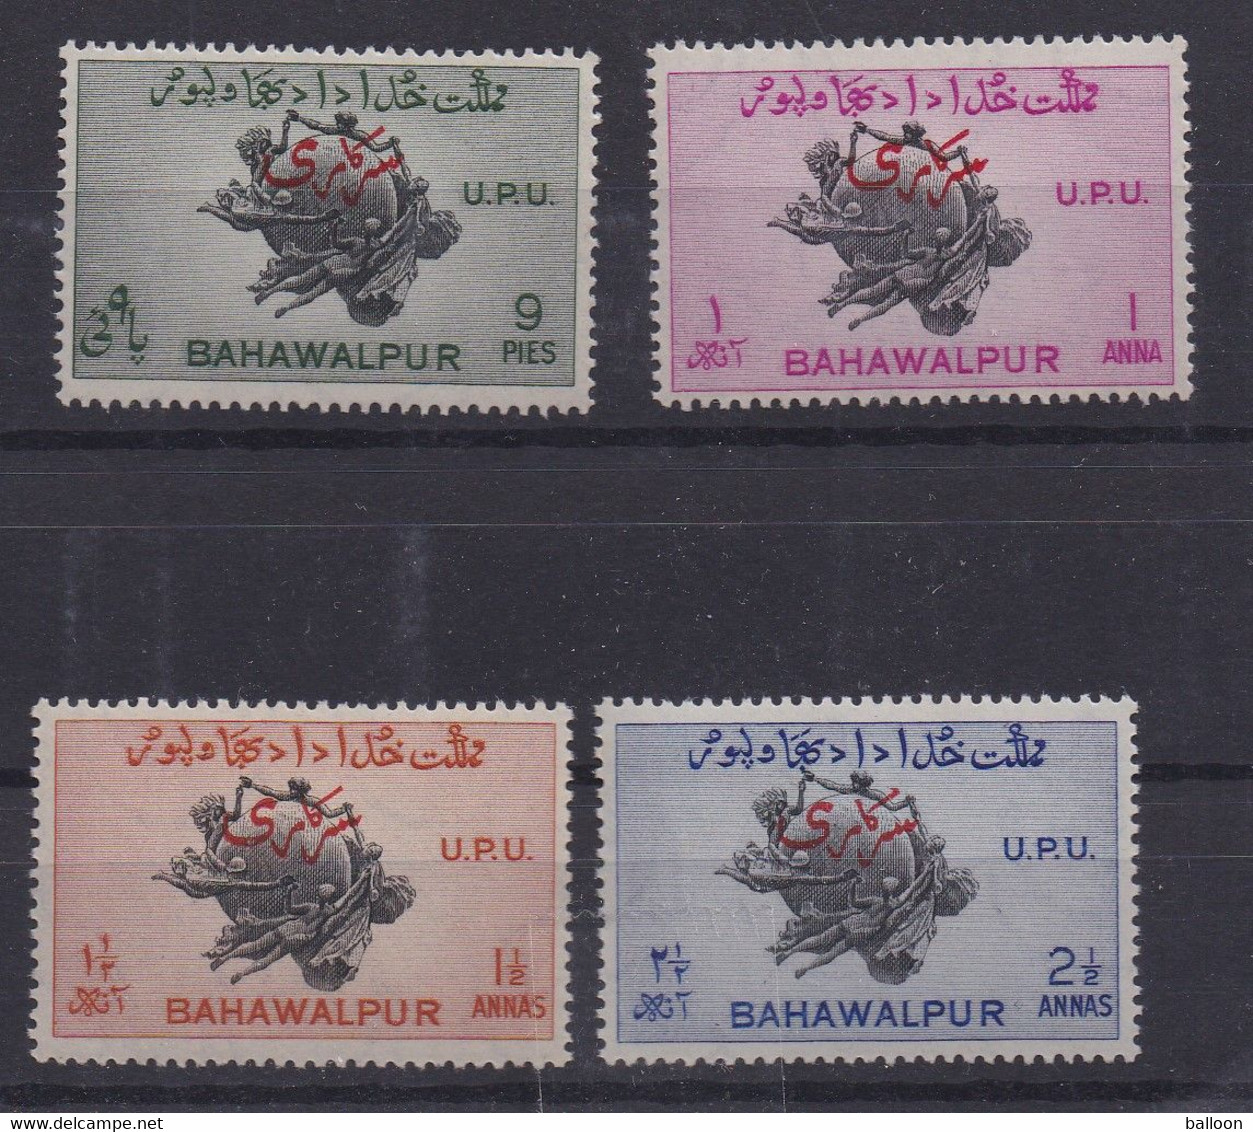 Bahawalpur - 1949 - Timbres De Service - Série N° 26 à 29 - 75° Anniversaire De L'UPU - Neuf - Bahawalpur